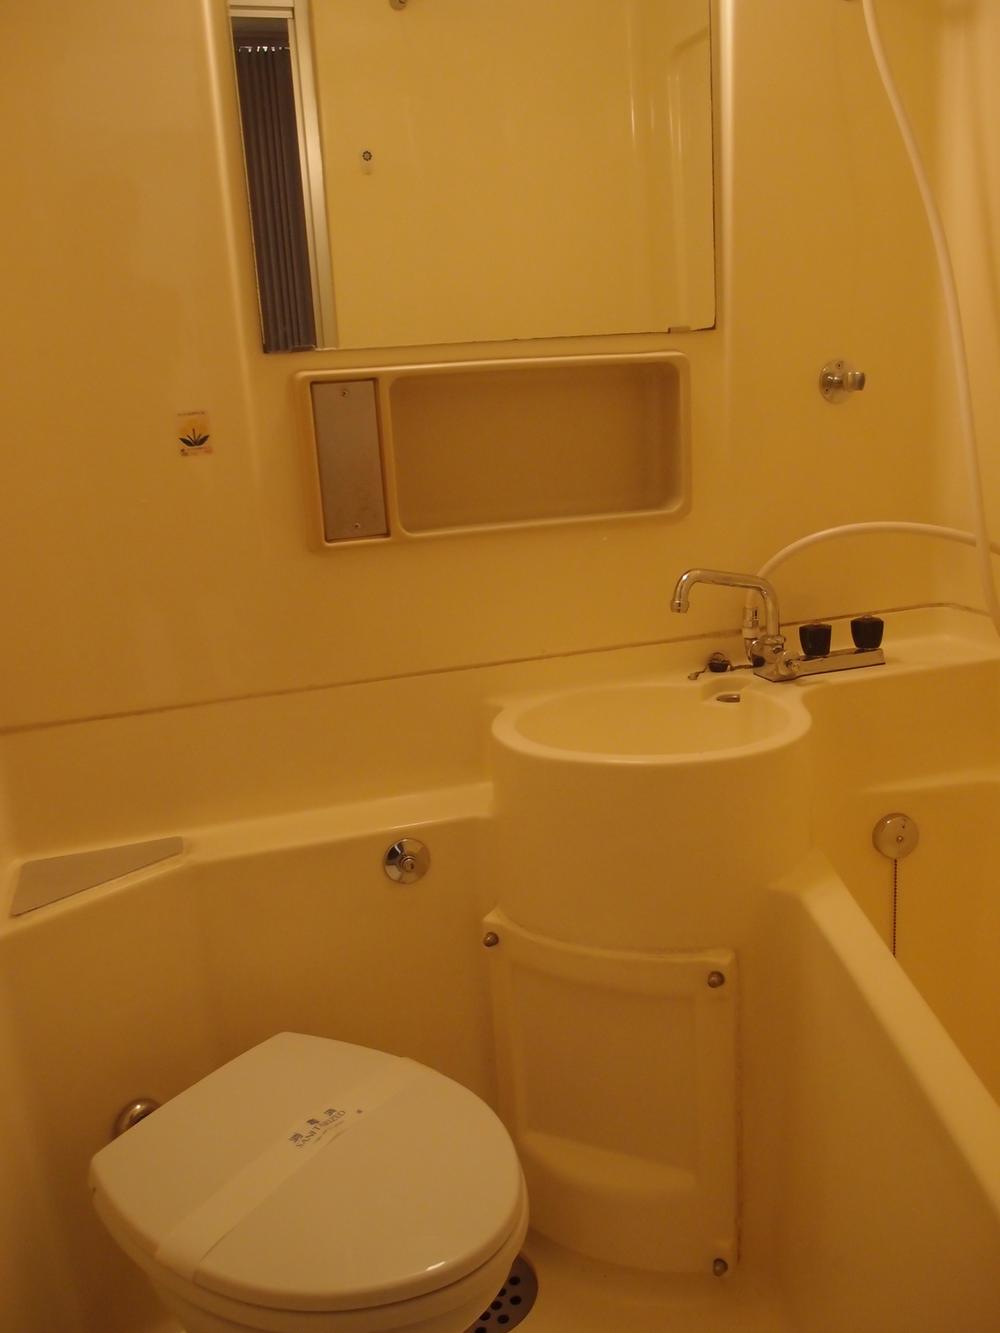 Bathroom. Indoor (12 May 2013) Shooting ~ bathroom ・ toilet ・ Washroom, December 2013 House cleaned ~